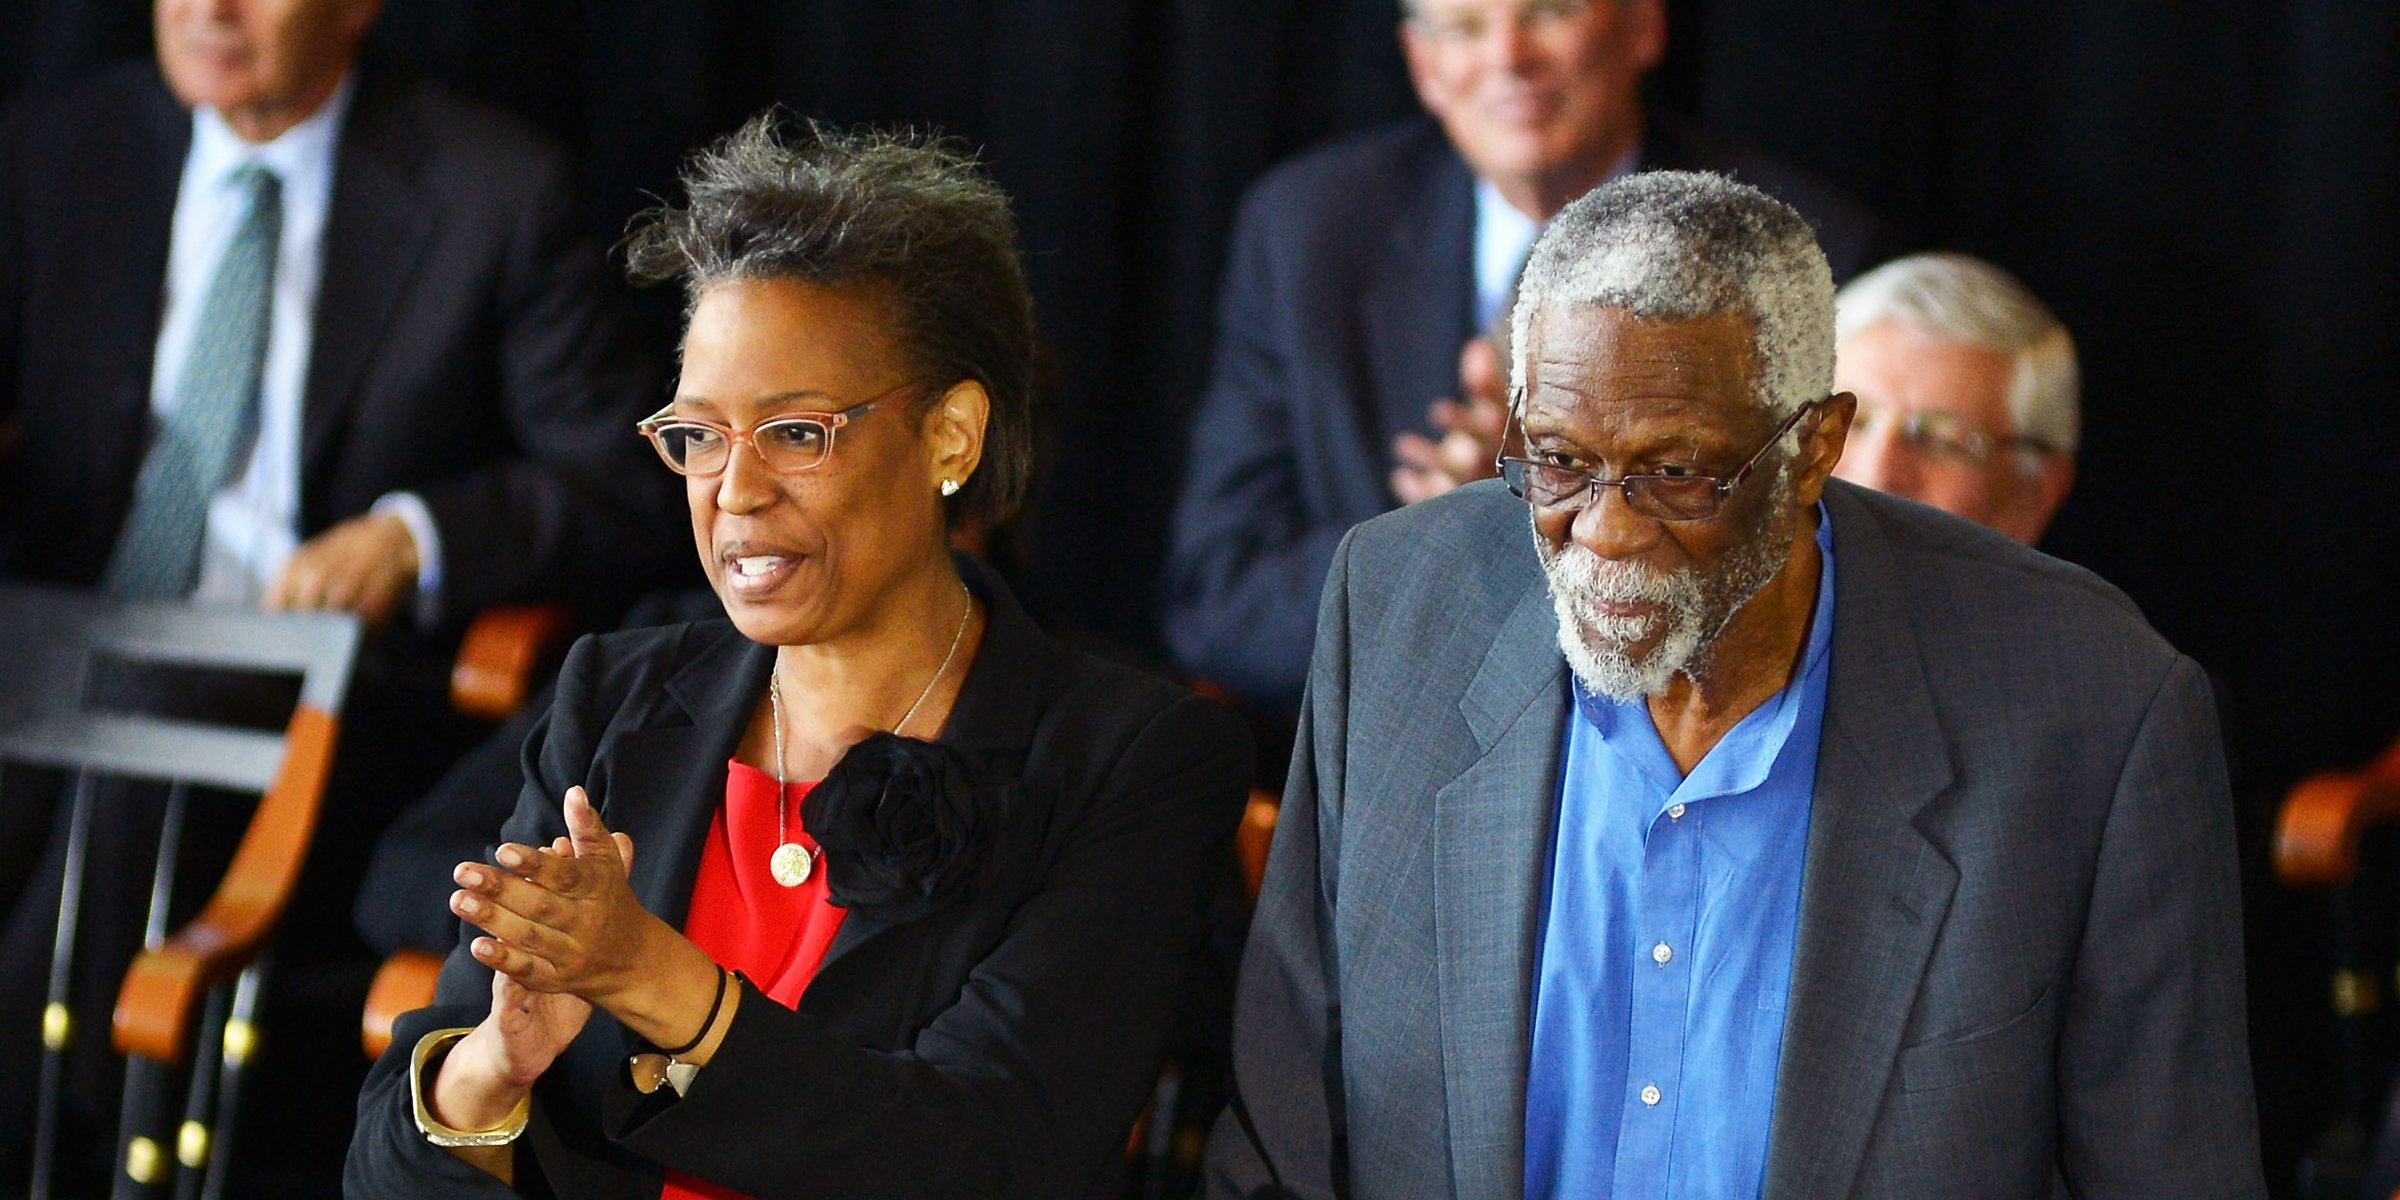  Karen Kenyatta Russel with Bill Russell. | Source: Getty Images